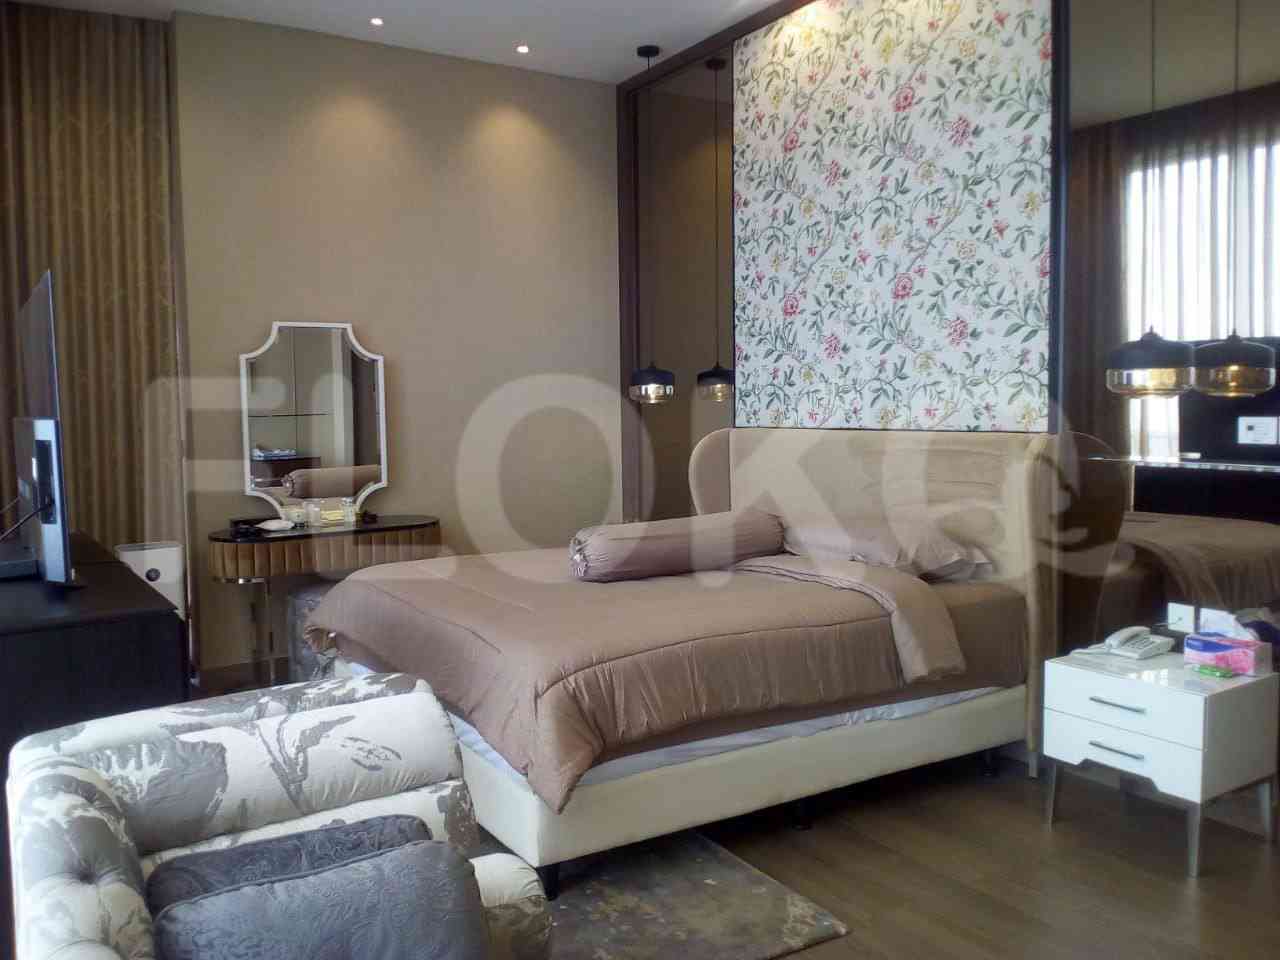 2 Bedroom on 57th Floor for Rent in Pakubuwono Spring Apartment - fgabdb 4